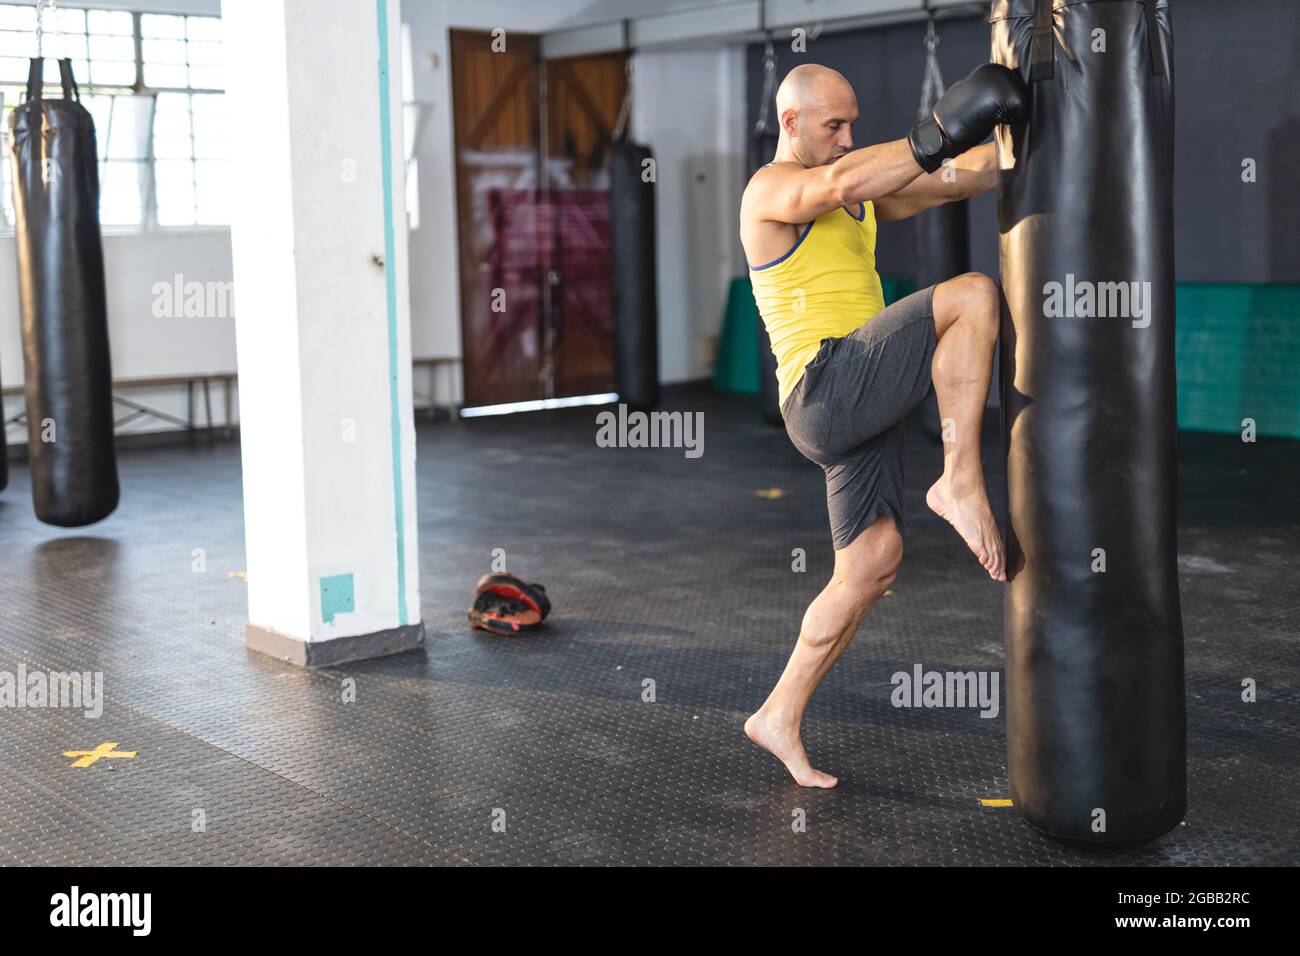 Muscle man boxing -Fotos und -Bildmaterial in hoher Auflösung – Alamy